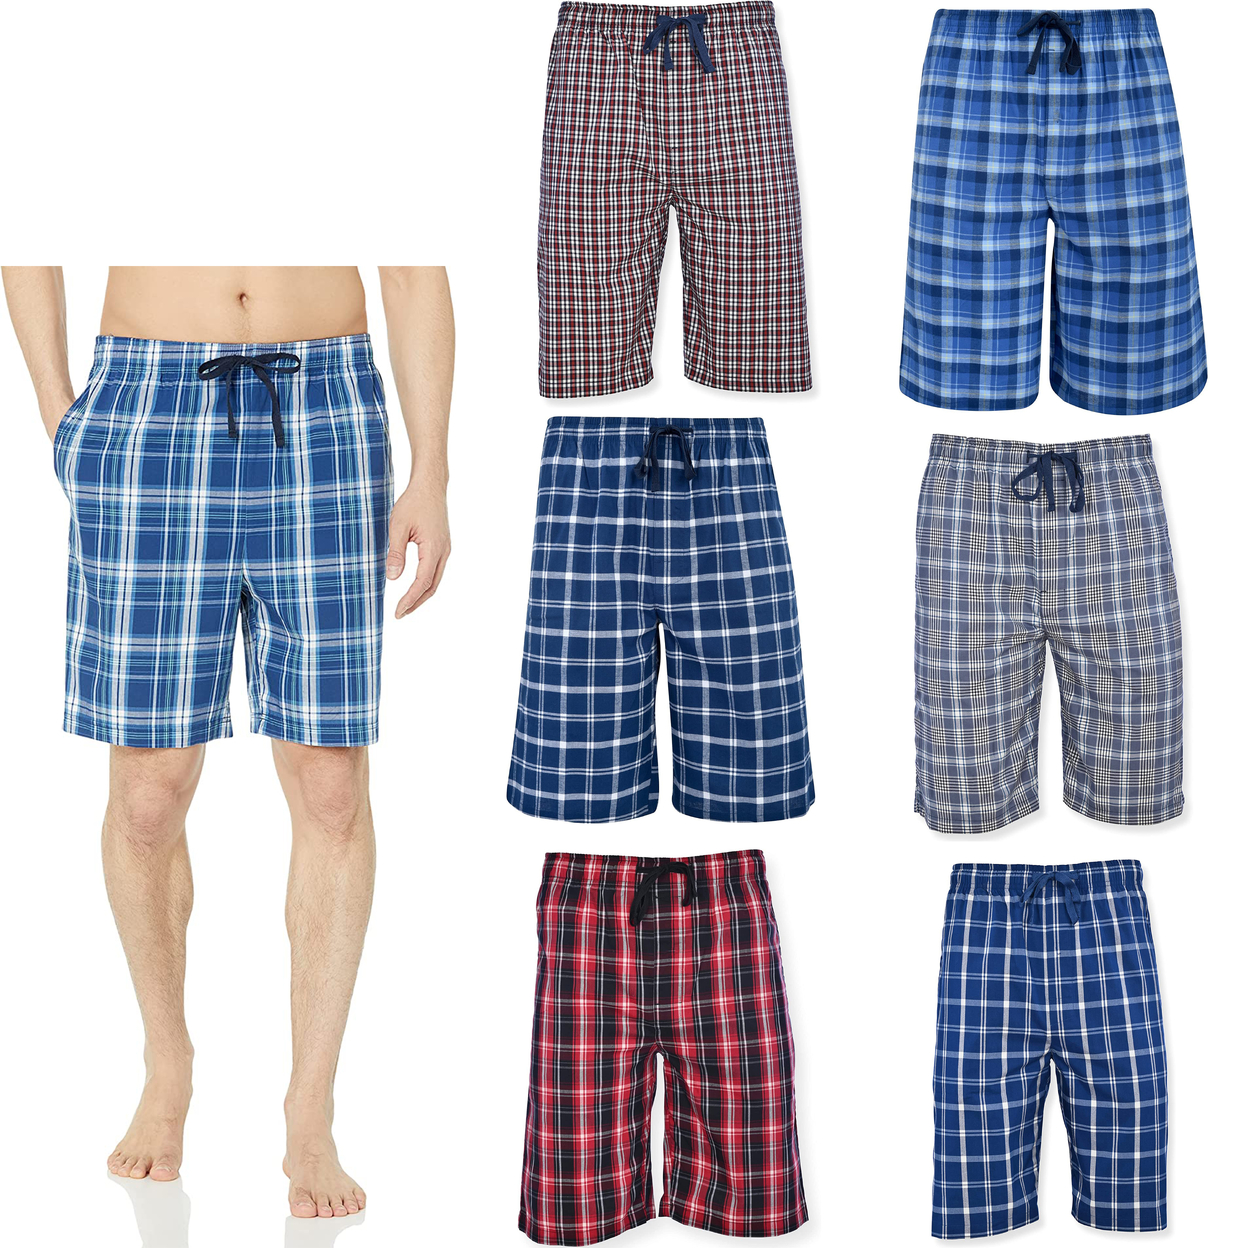 2-Pack: Men's Ultra Soft Plaid Lounge Pajama Sleep Wear Shorts - Red & Blue, Large